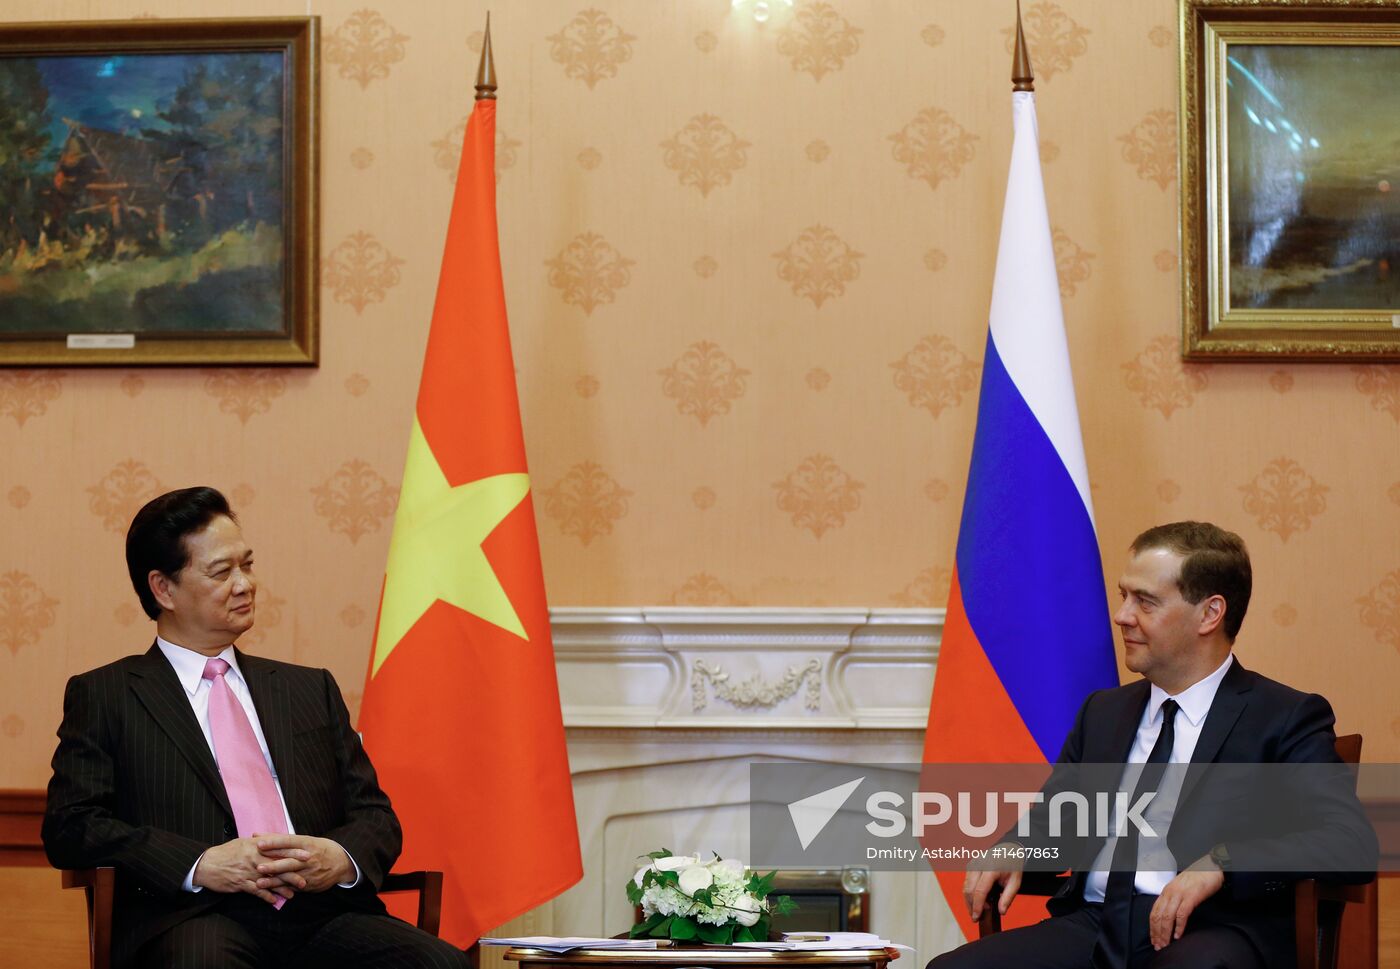 Dmitry Mevedev has talks with Nguyen Tan Dung